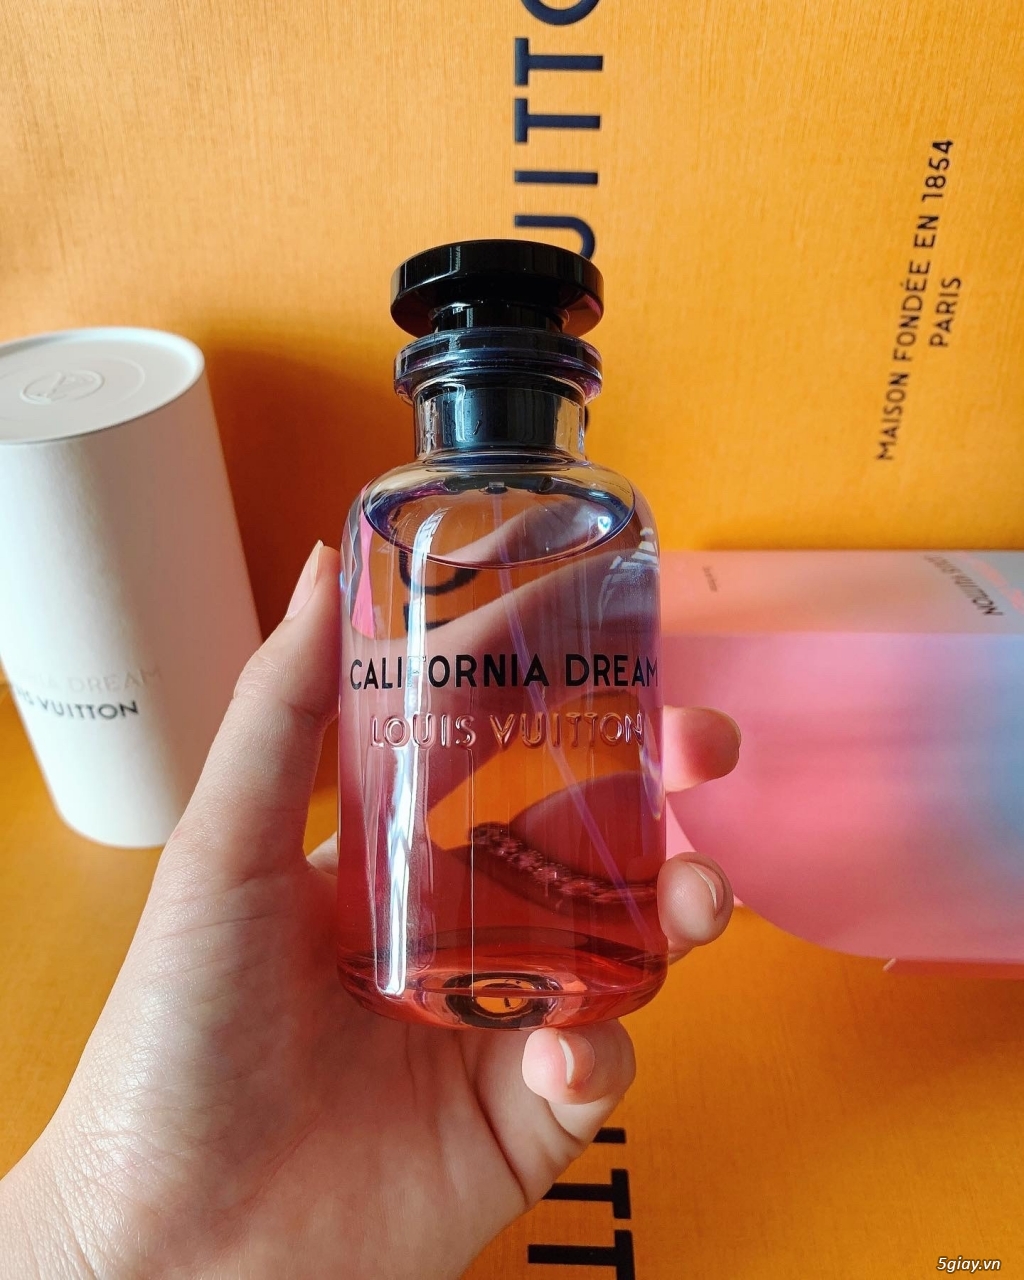 New Perfume Review Louis Vuitton California Dream- Sunset on Sunset -  Colognoisseur